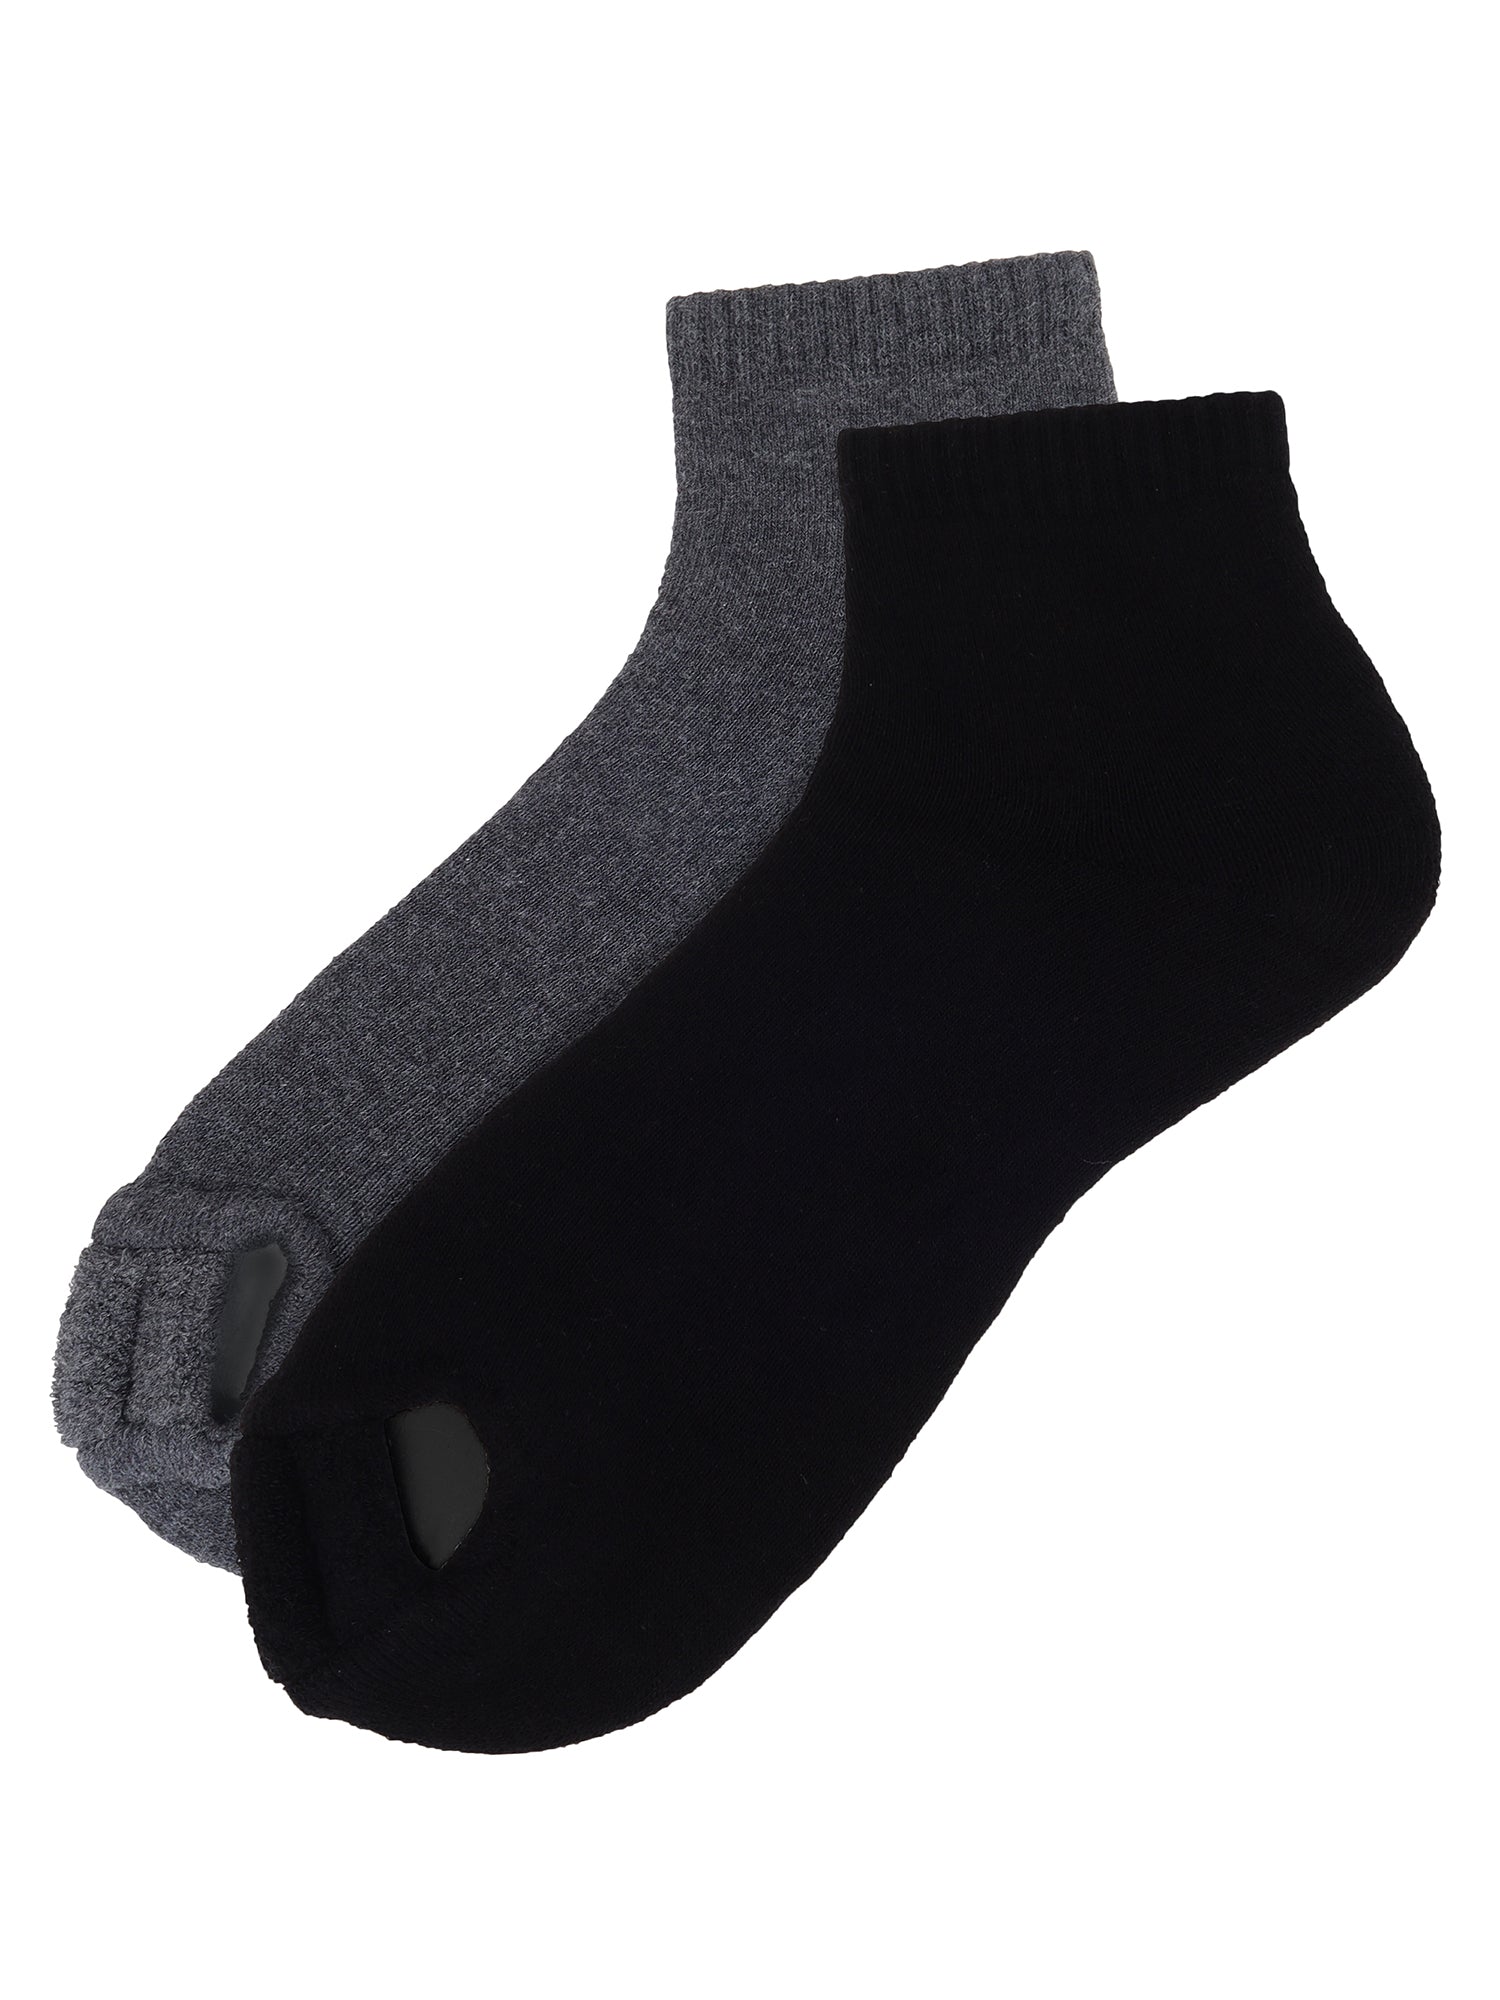 Foot Alignment Sock Black & Grey Classic Pack of 2 Pairs